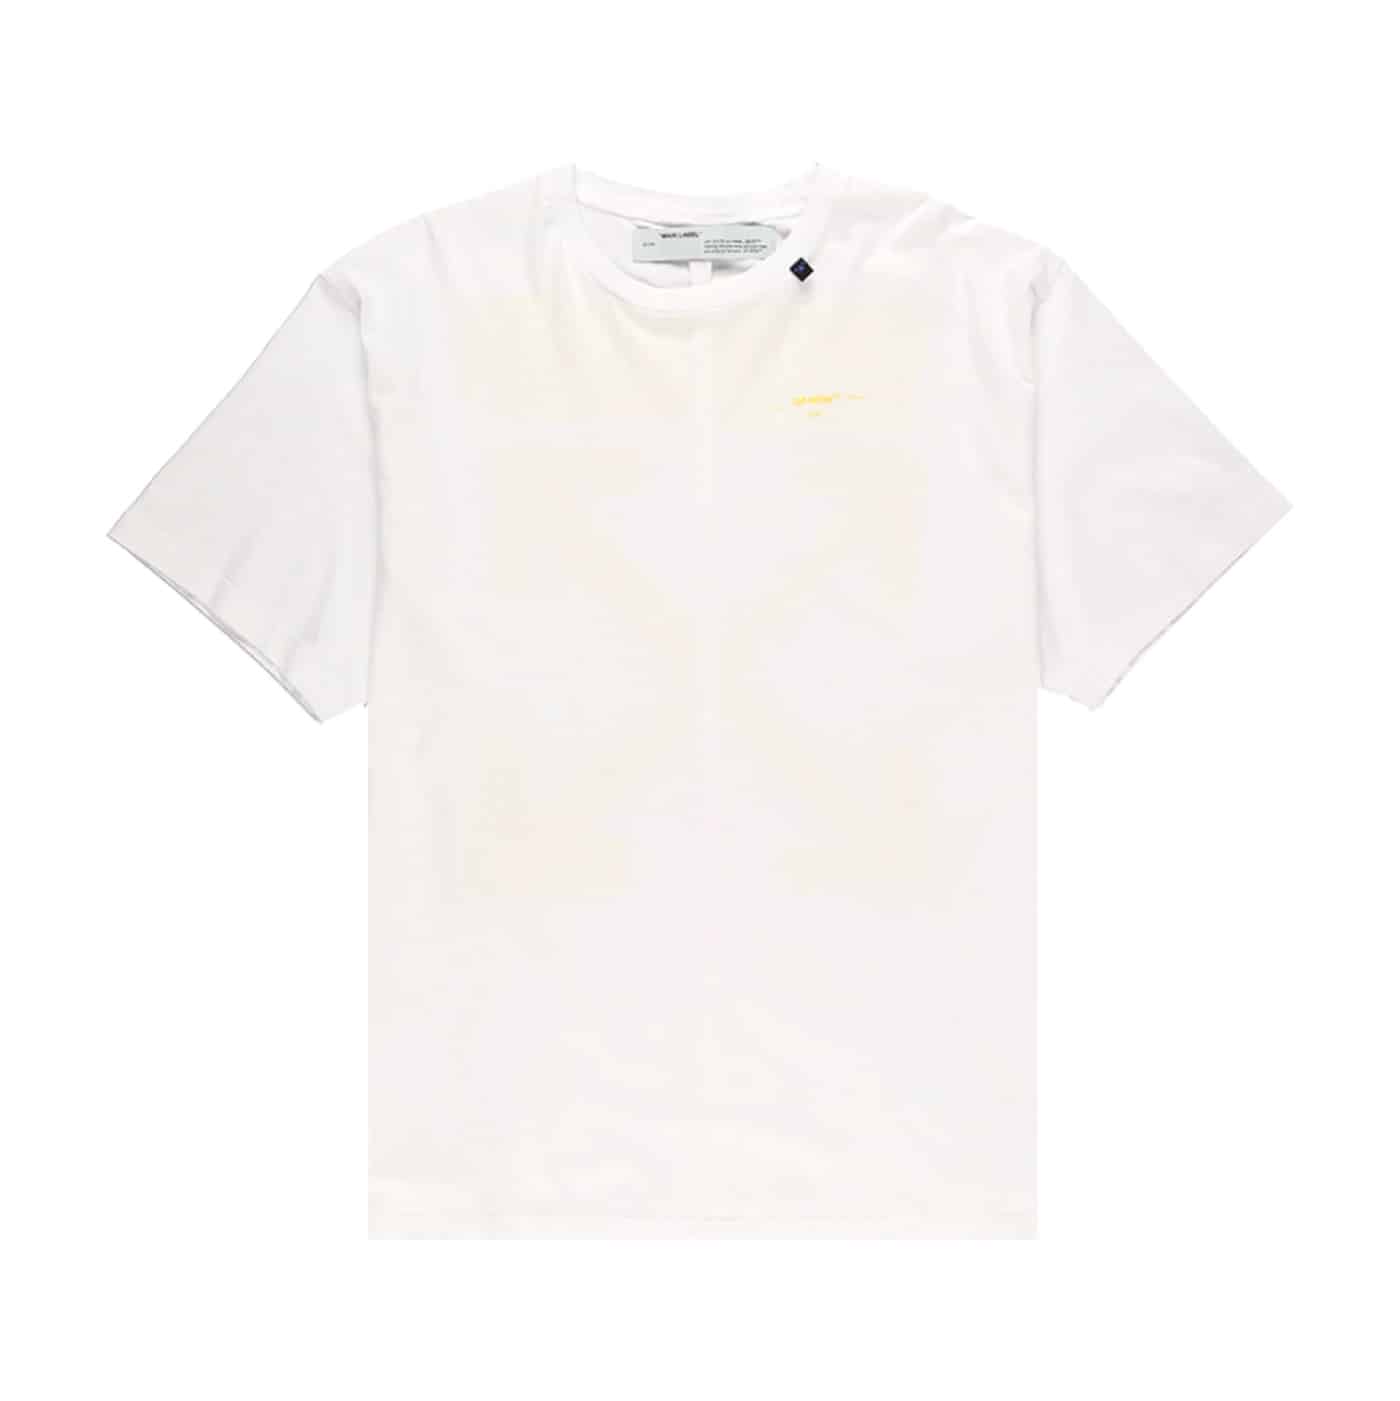 OFF-WHITE Oversized Acrylic Arrows S/S T-Shirt White/Yellow Off-White